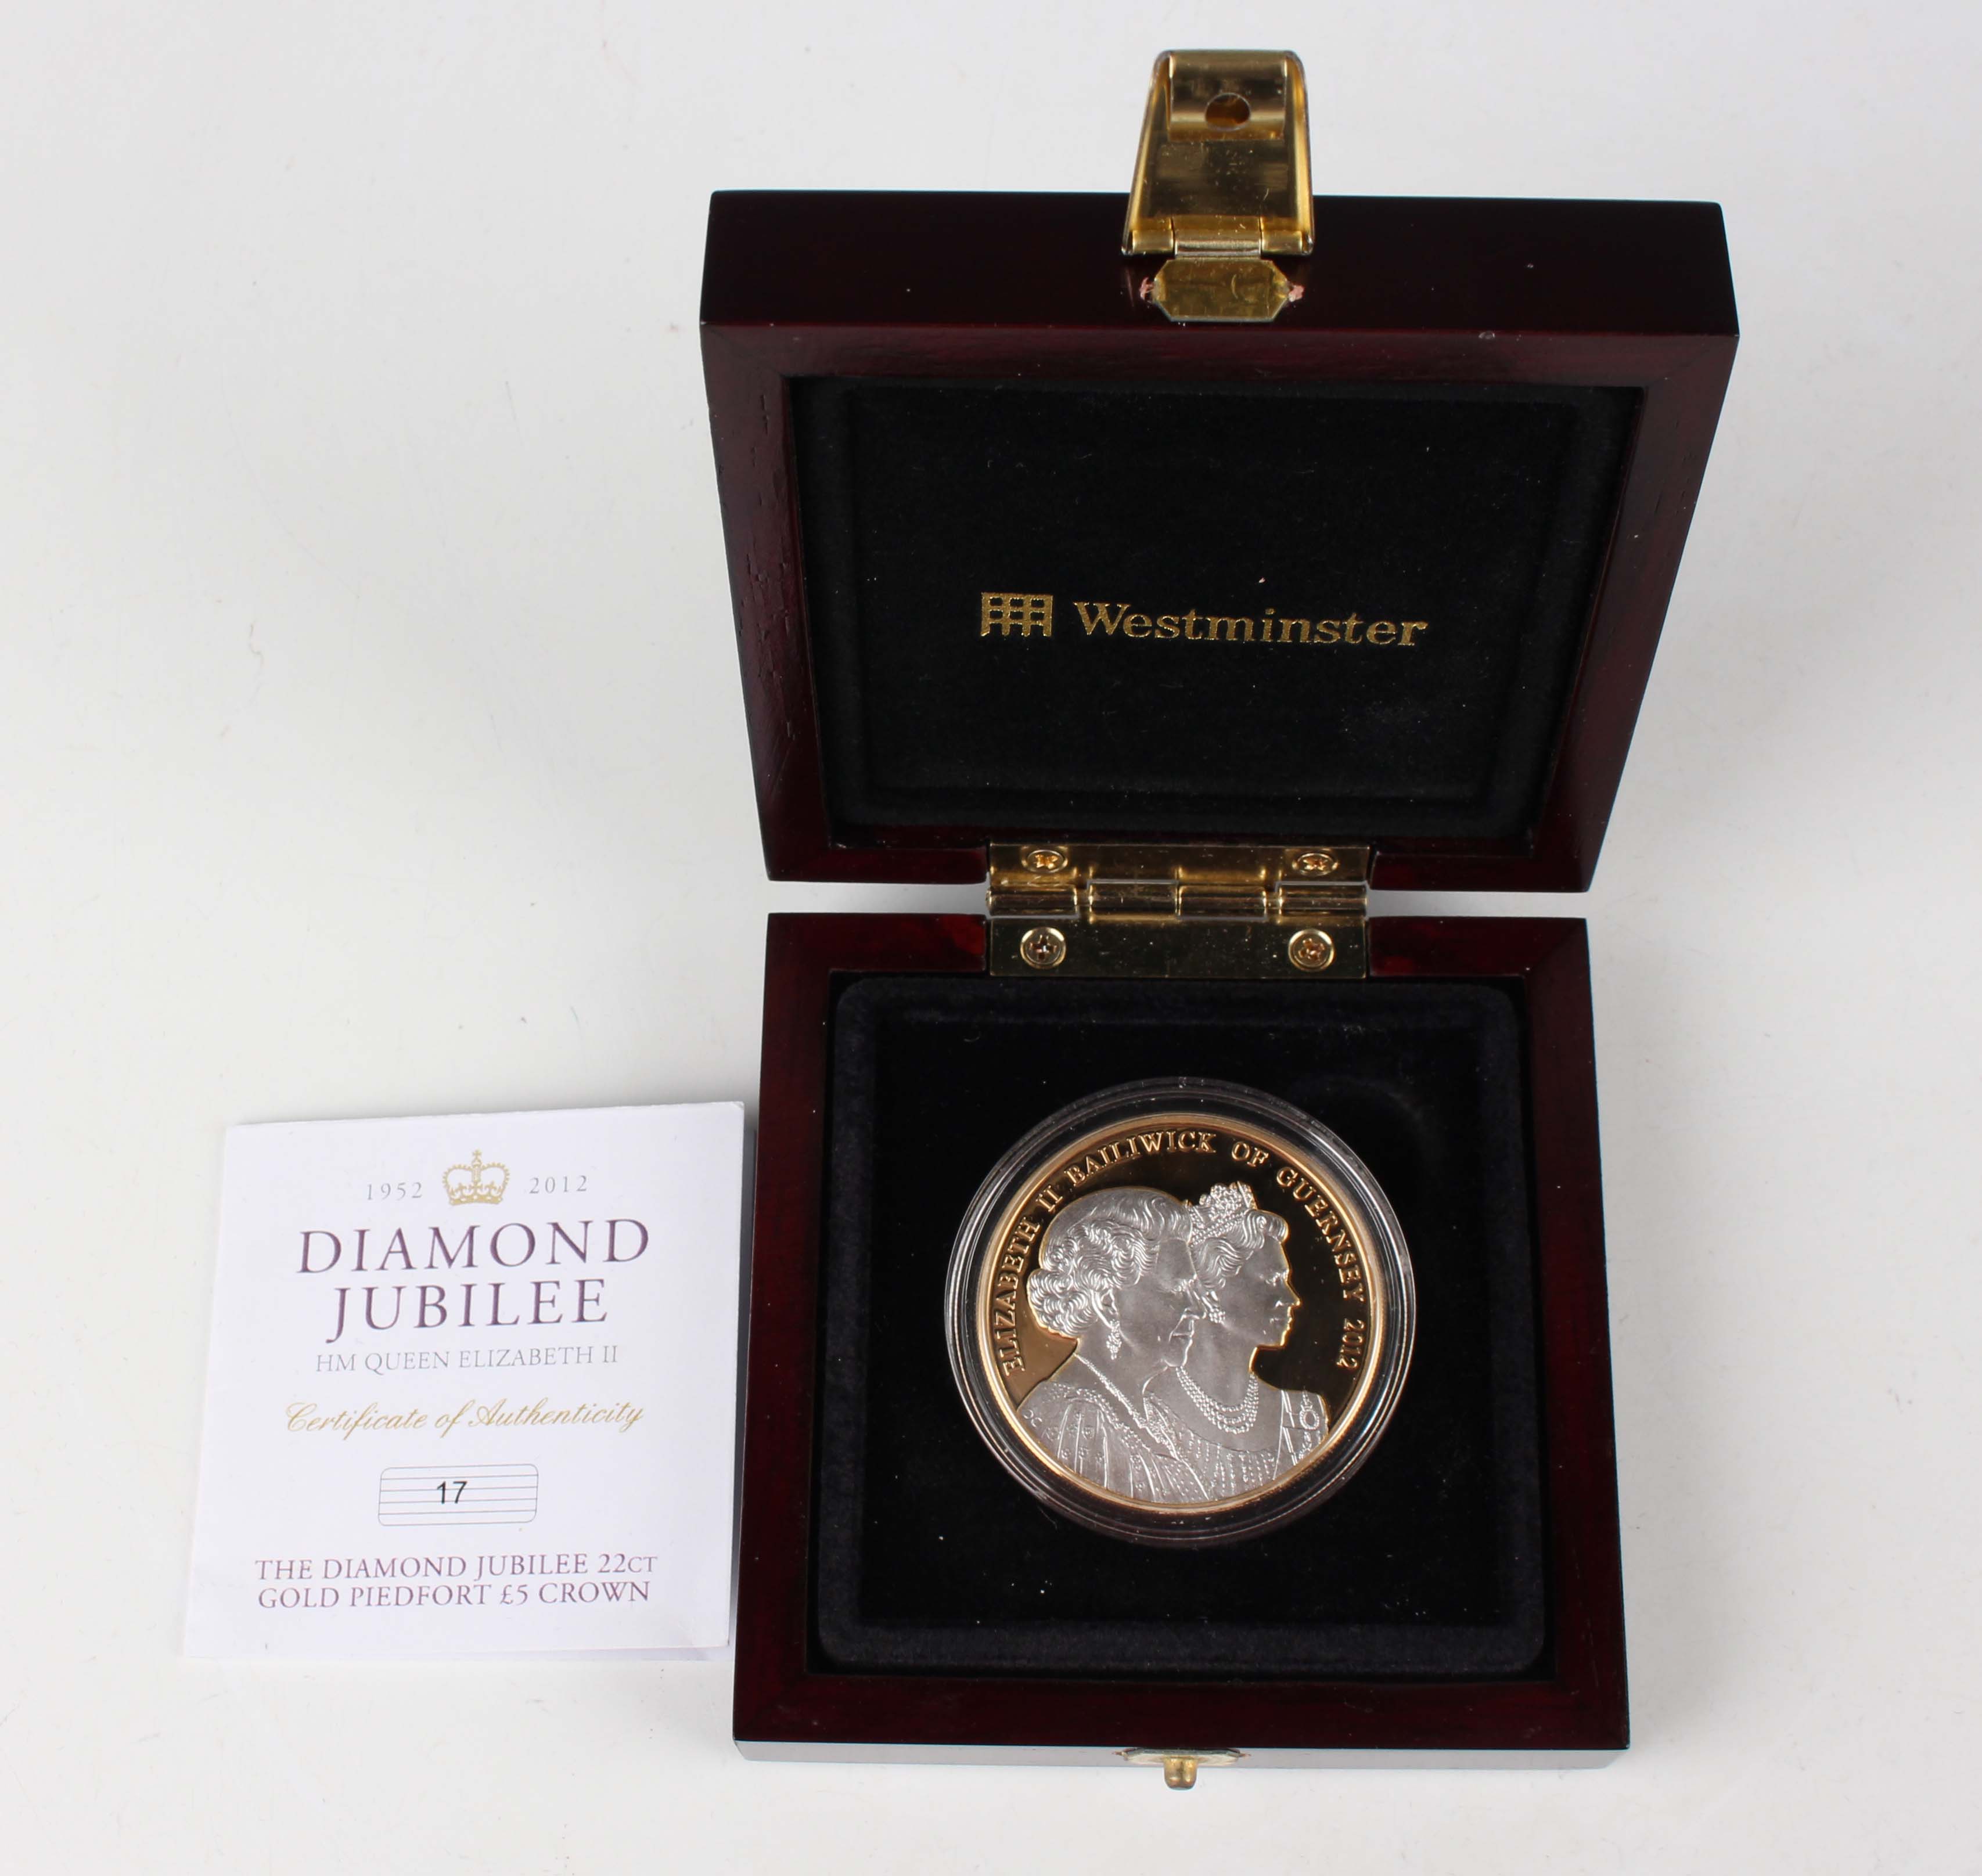 An Elizabeth II Westminster Mint Diamond Jubilee gold piedfort five pounds 2012, cased with